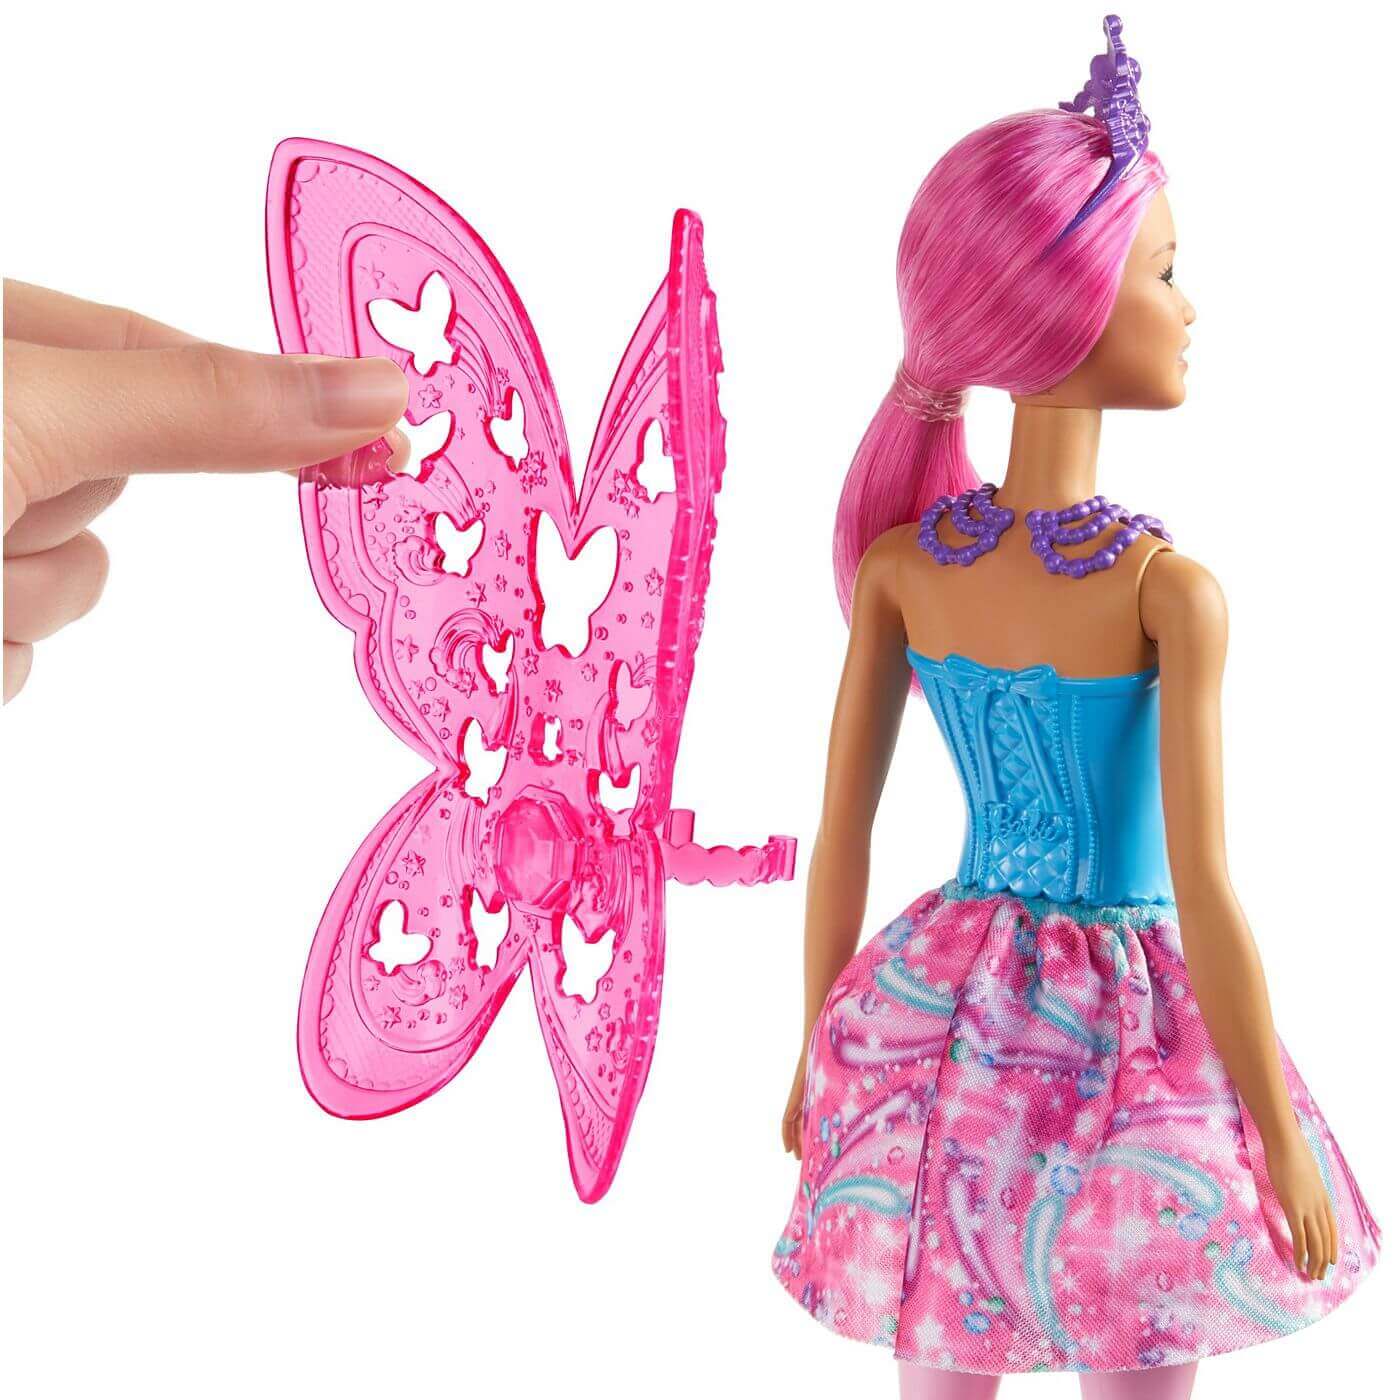 Hada de pelo rosa con alas y tiaras ( Mattel GJJ99 ) imagen e